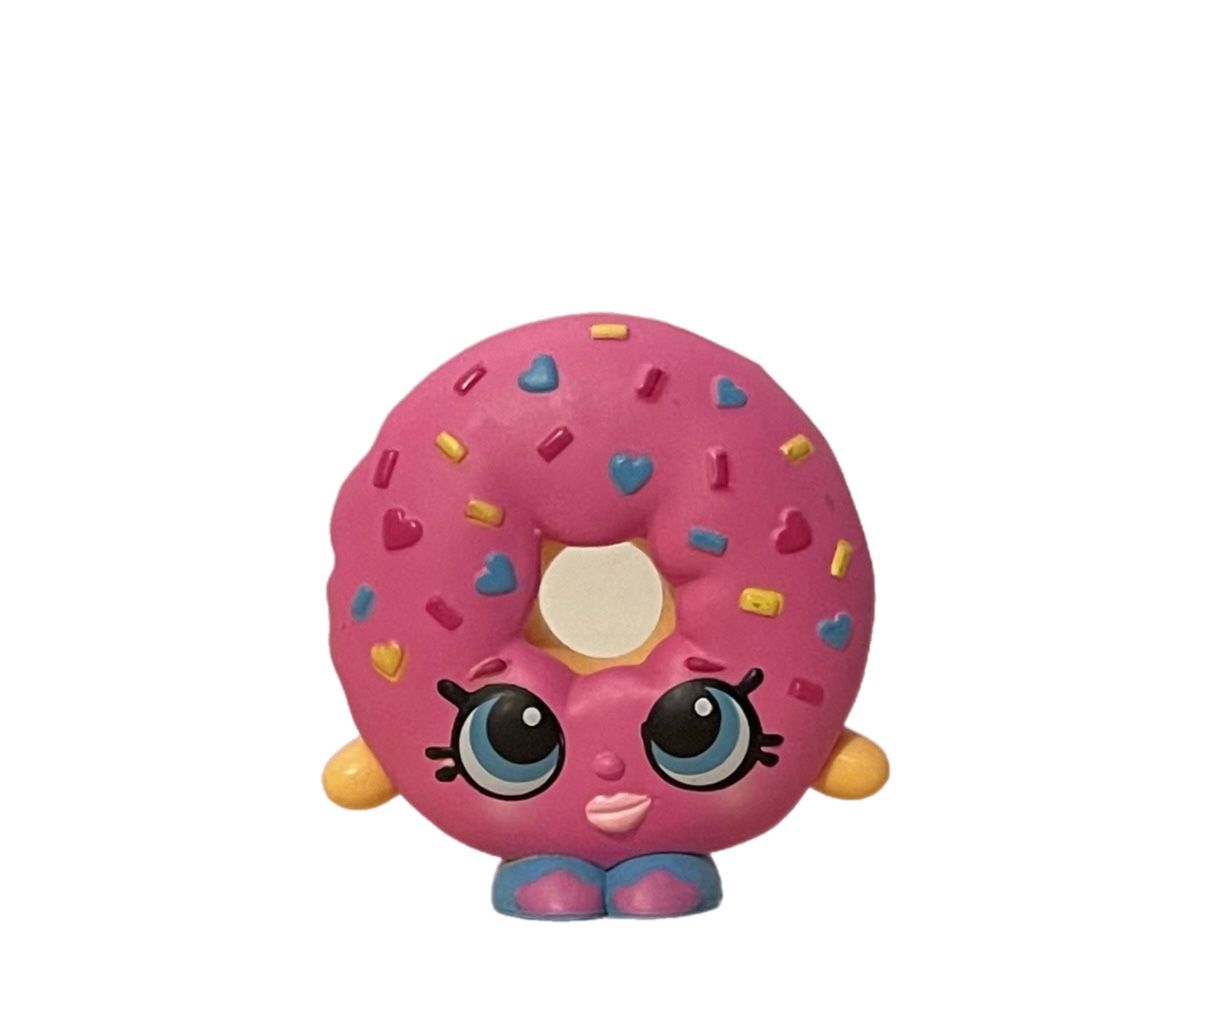 Funko Shopkins D’Lish Donut Vinyl Figure Collectible Toy 4” No Box